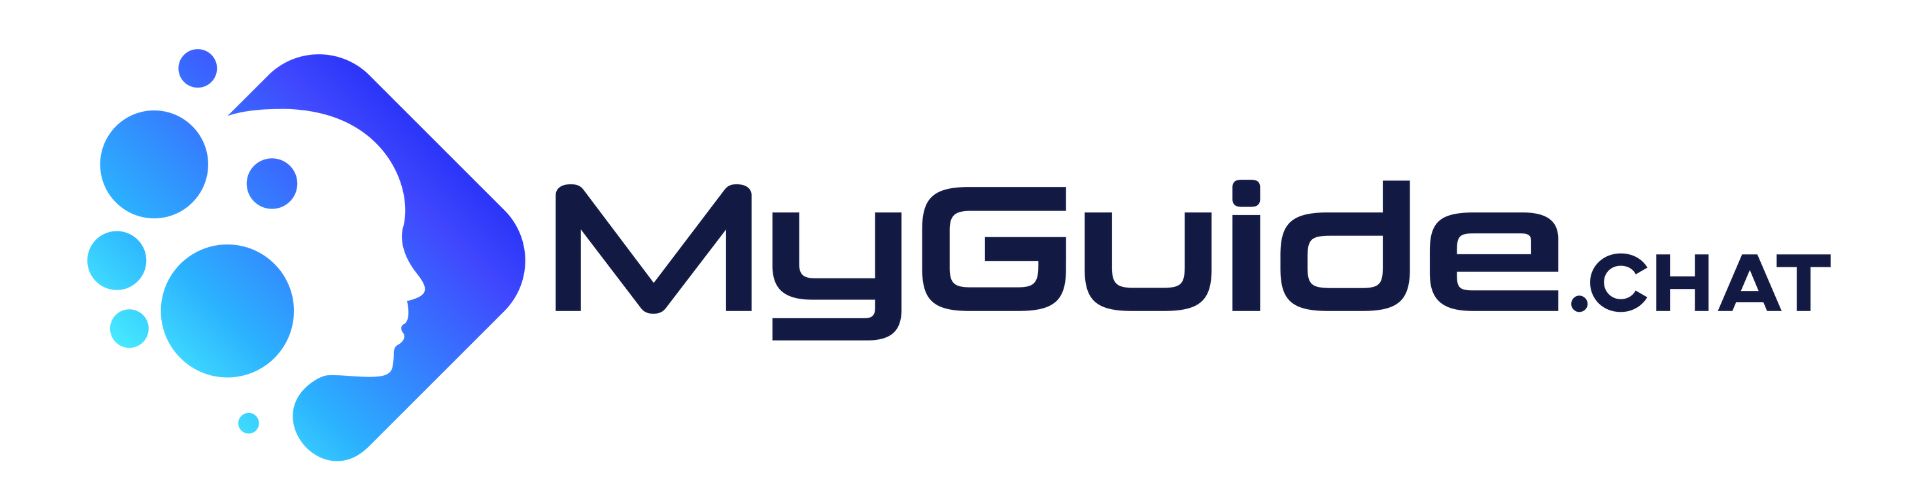 MyGuideChat Logo